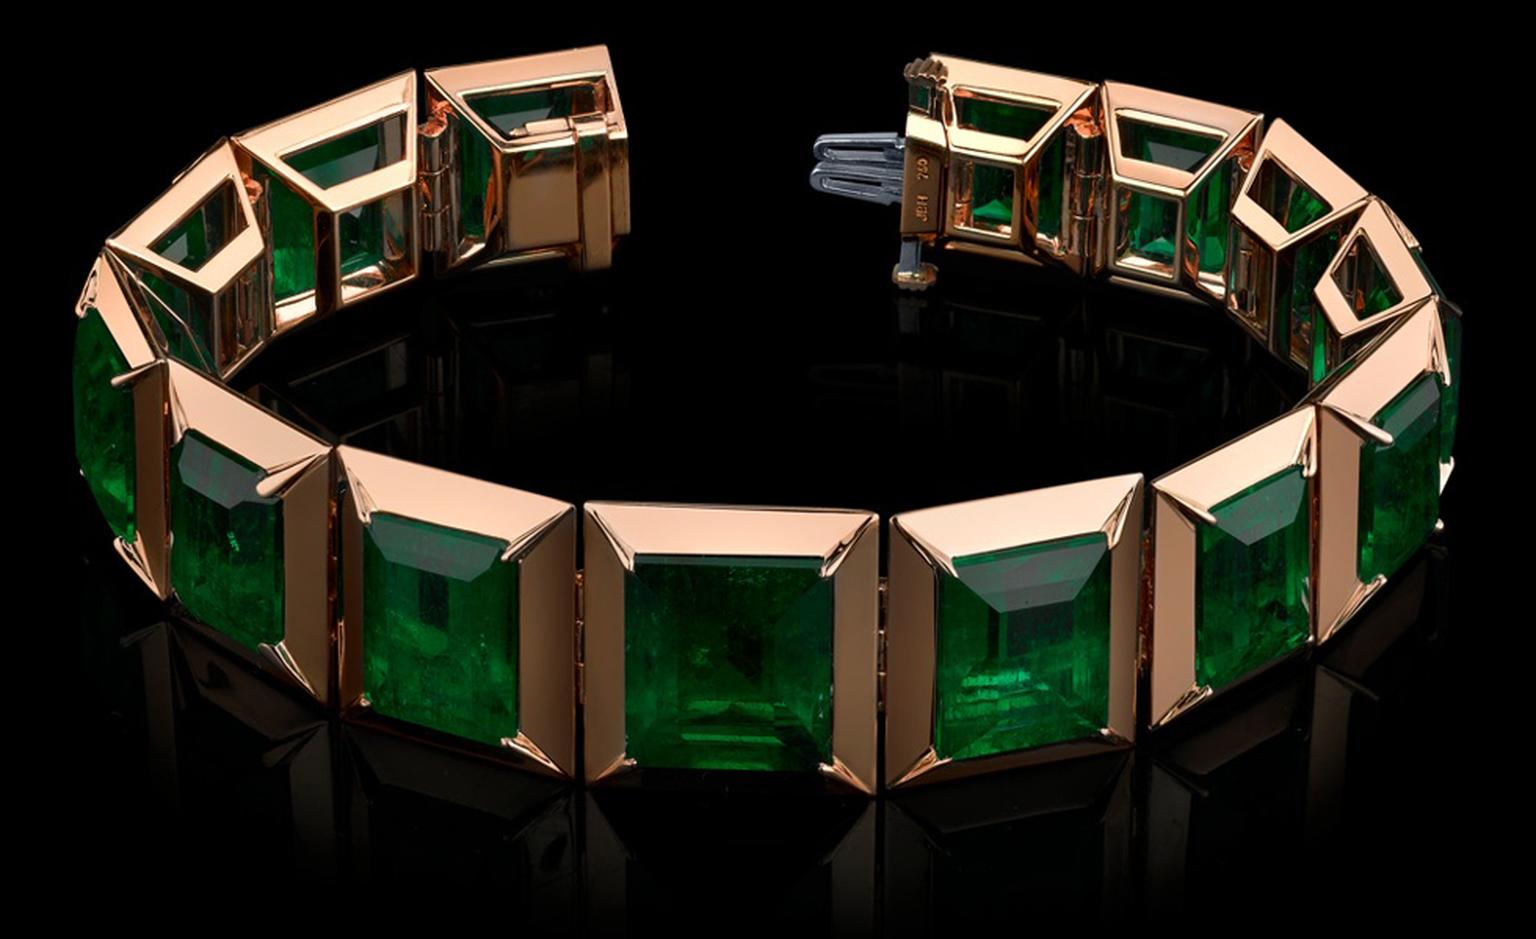 Style of Jolie Emerald Bracelet from her developed with jeweller Robert Procop. The bracelet features 14 Columbian green emeralds.